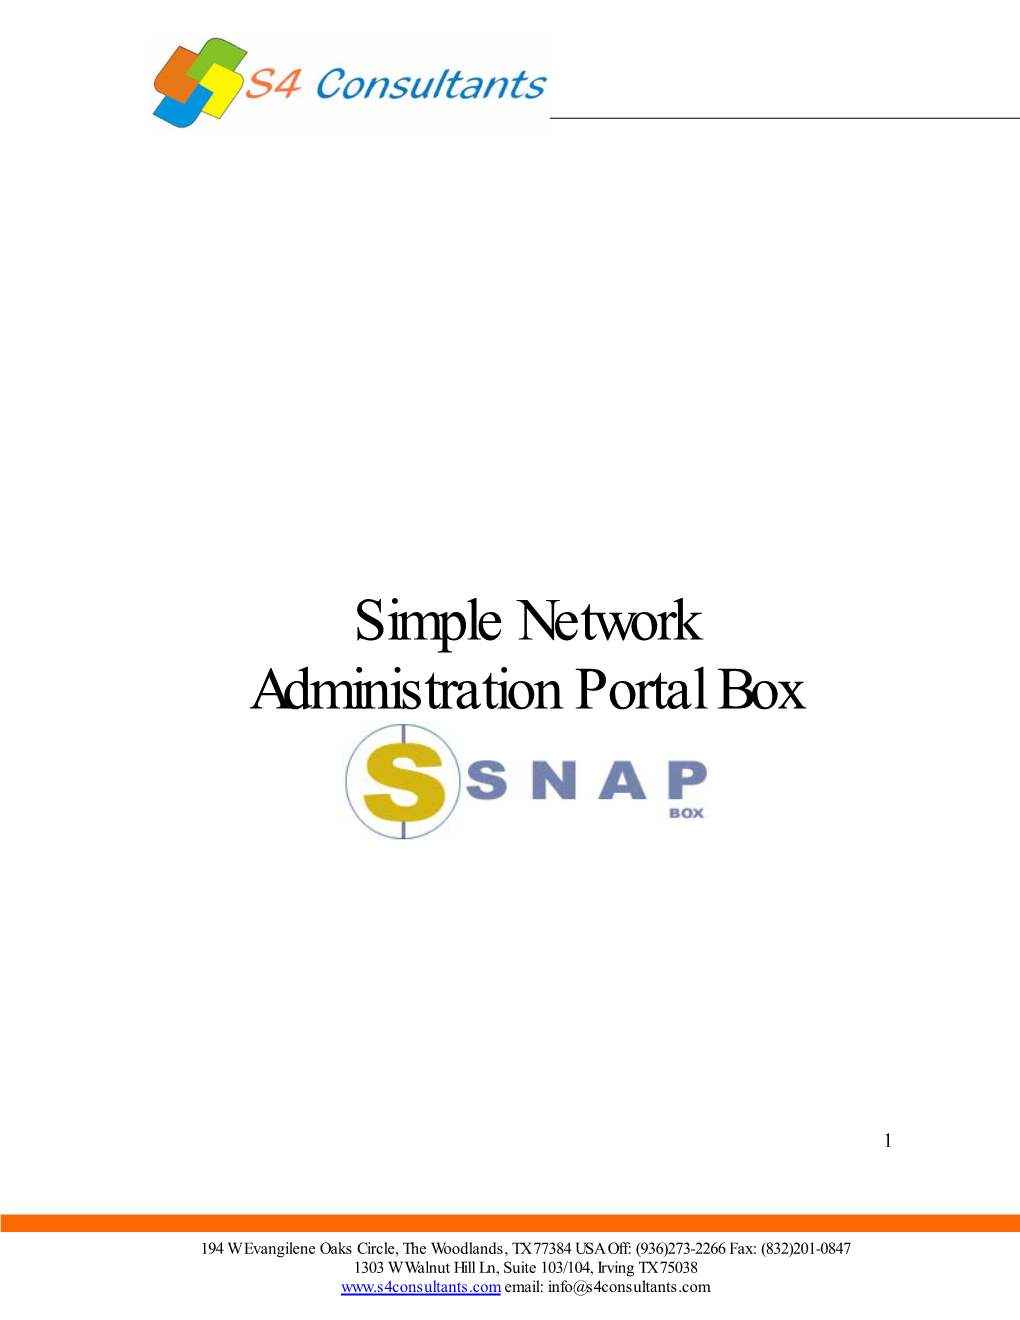 Simple Network Administration Portal Box